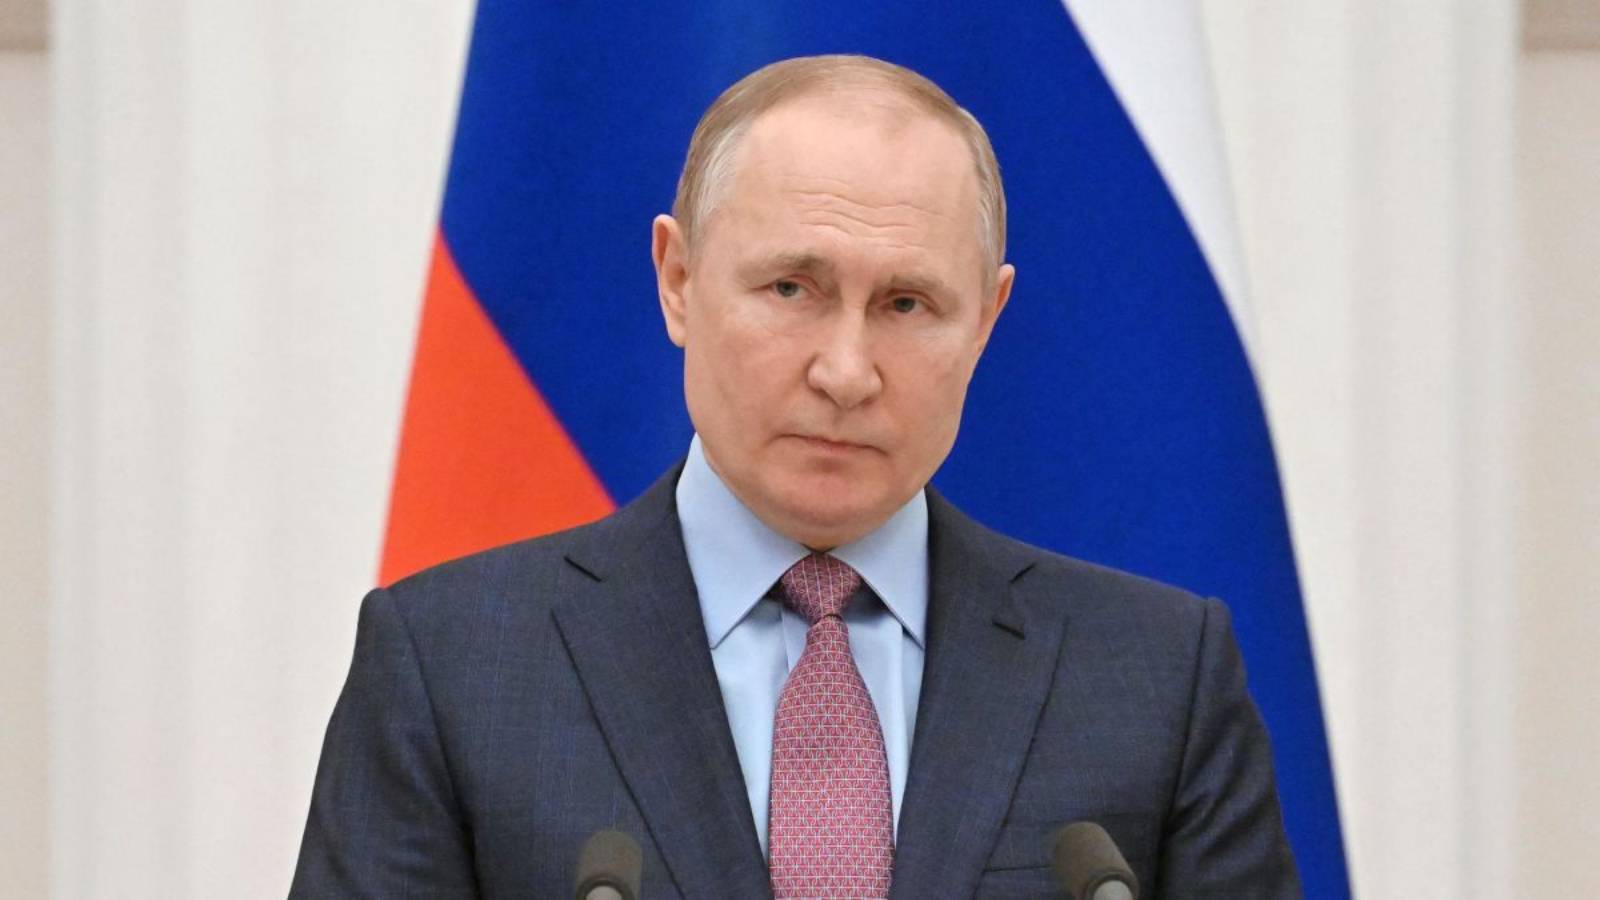 Decizia lui Vladimir Putin in fata Esecurilor Repetate din Ucraina